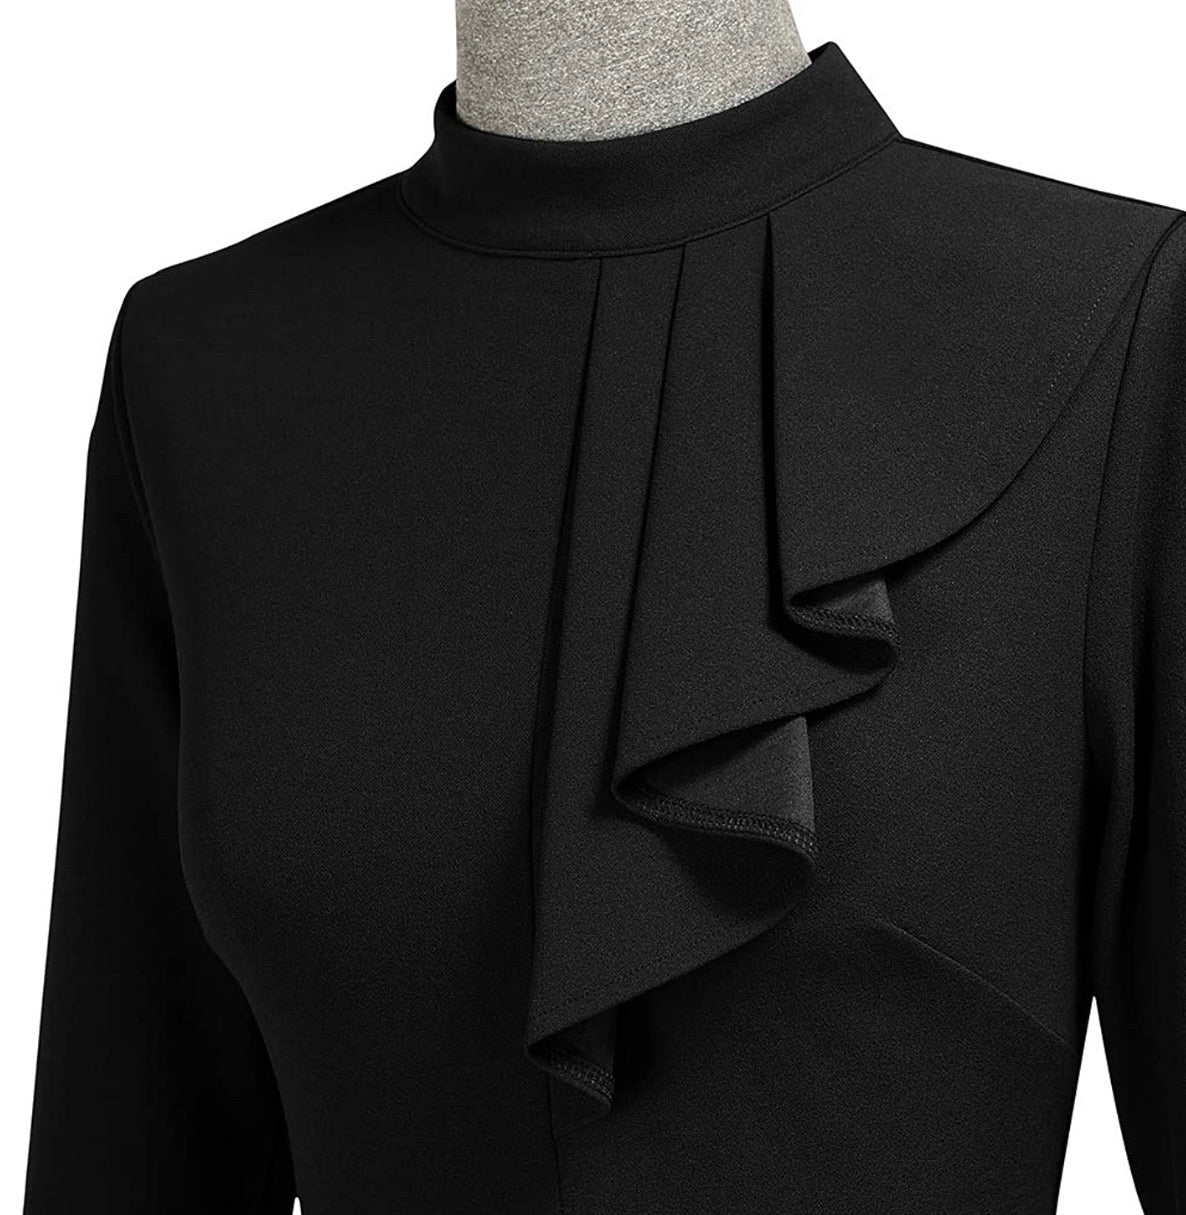 Vintage Inspired Pencil Dress, Sizes US 4 - 18 (Black)